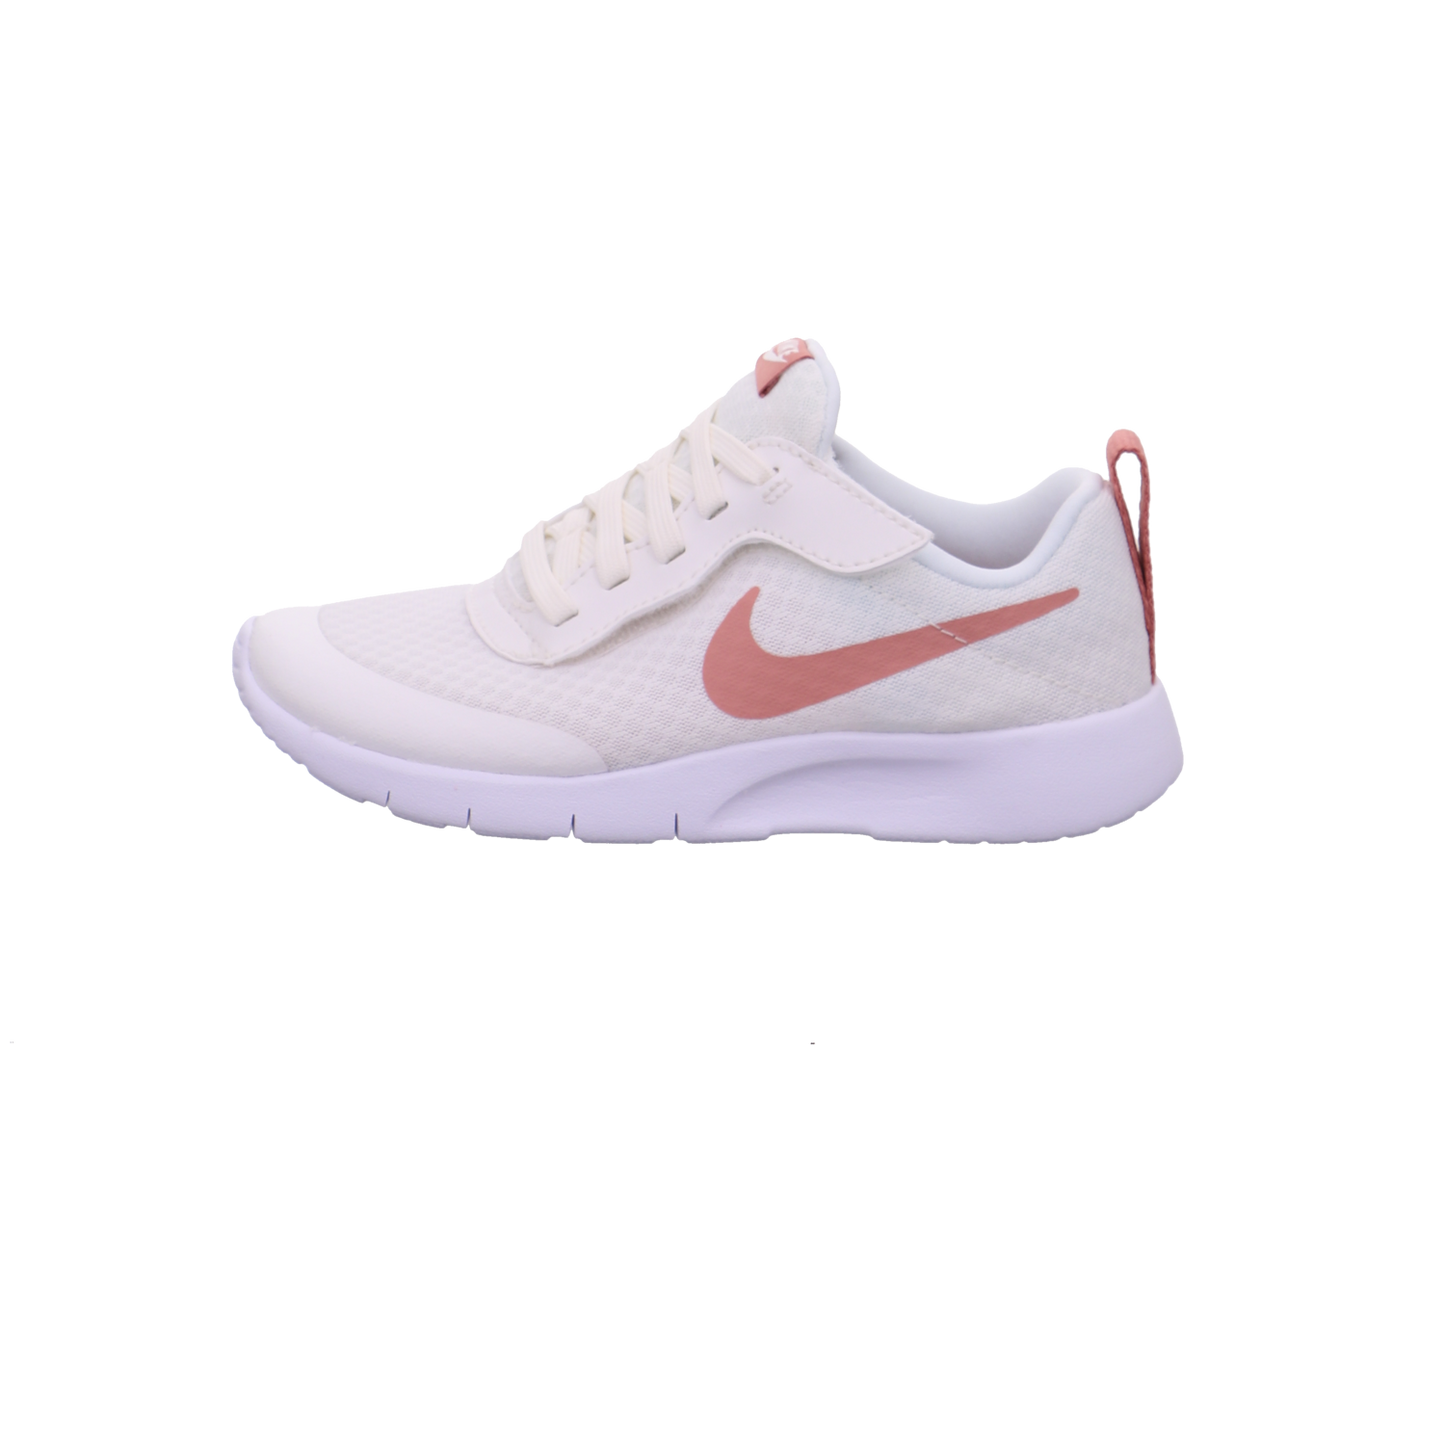 Nike Sneaker weiß rosa/rot Bild1